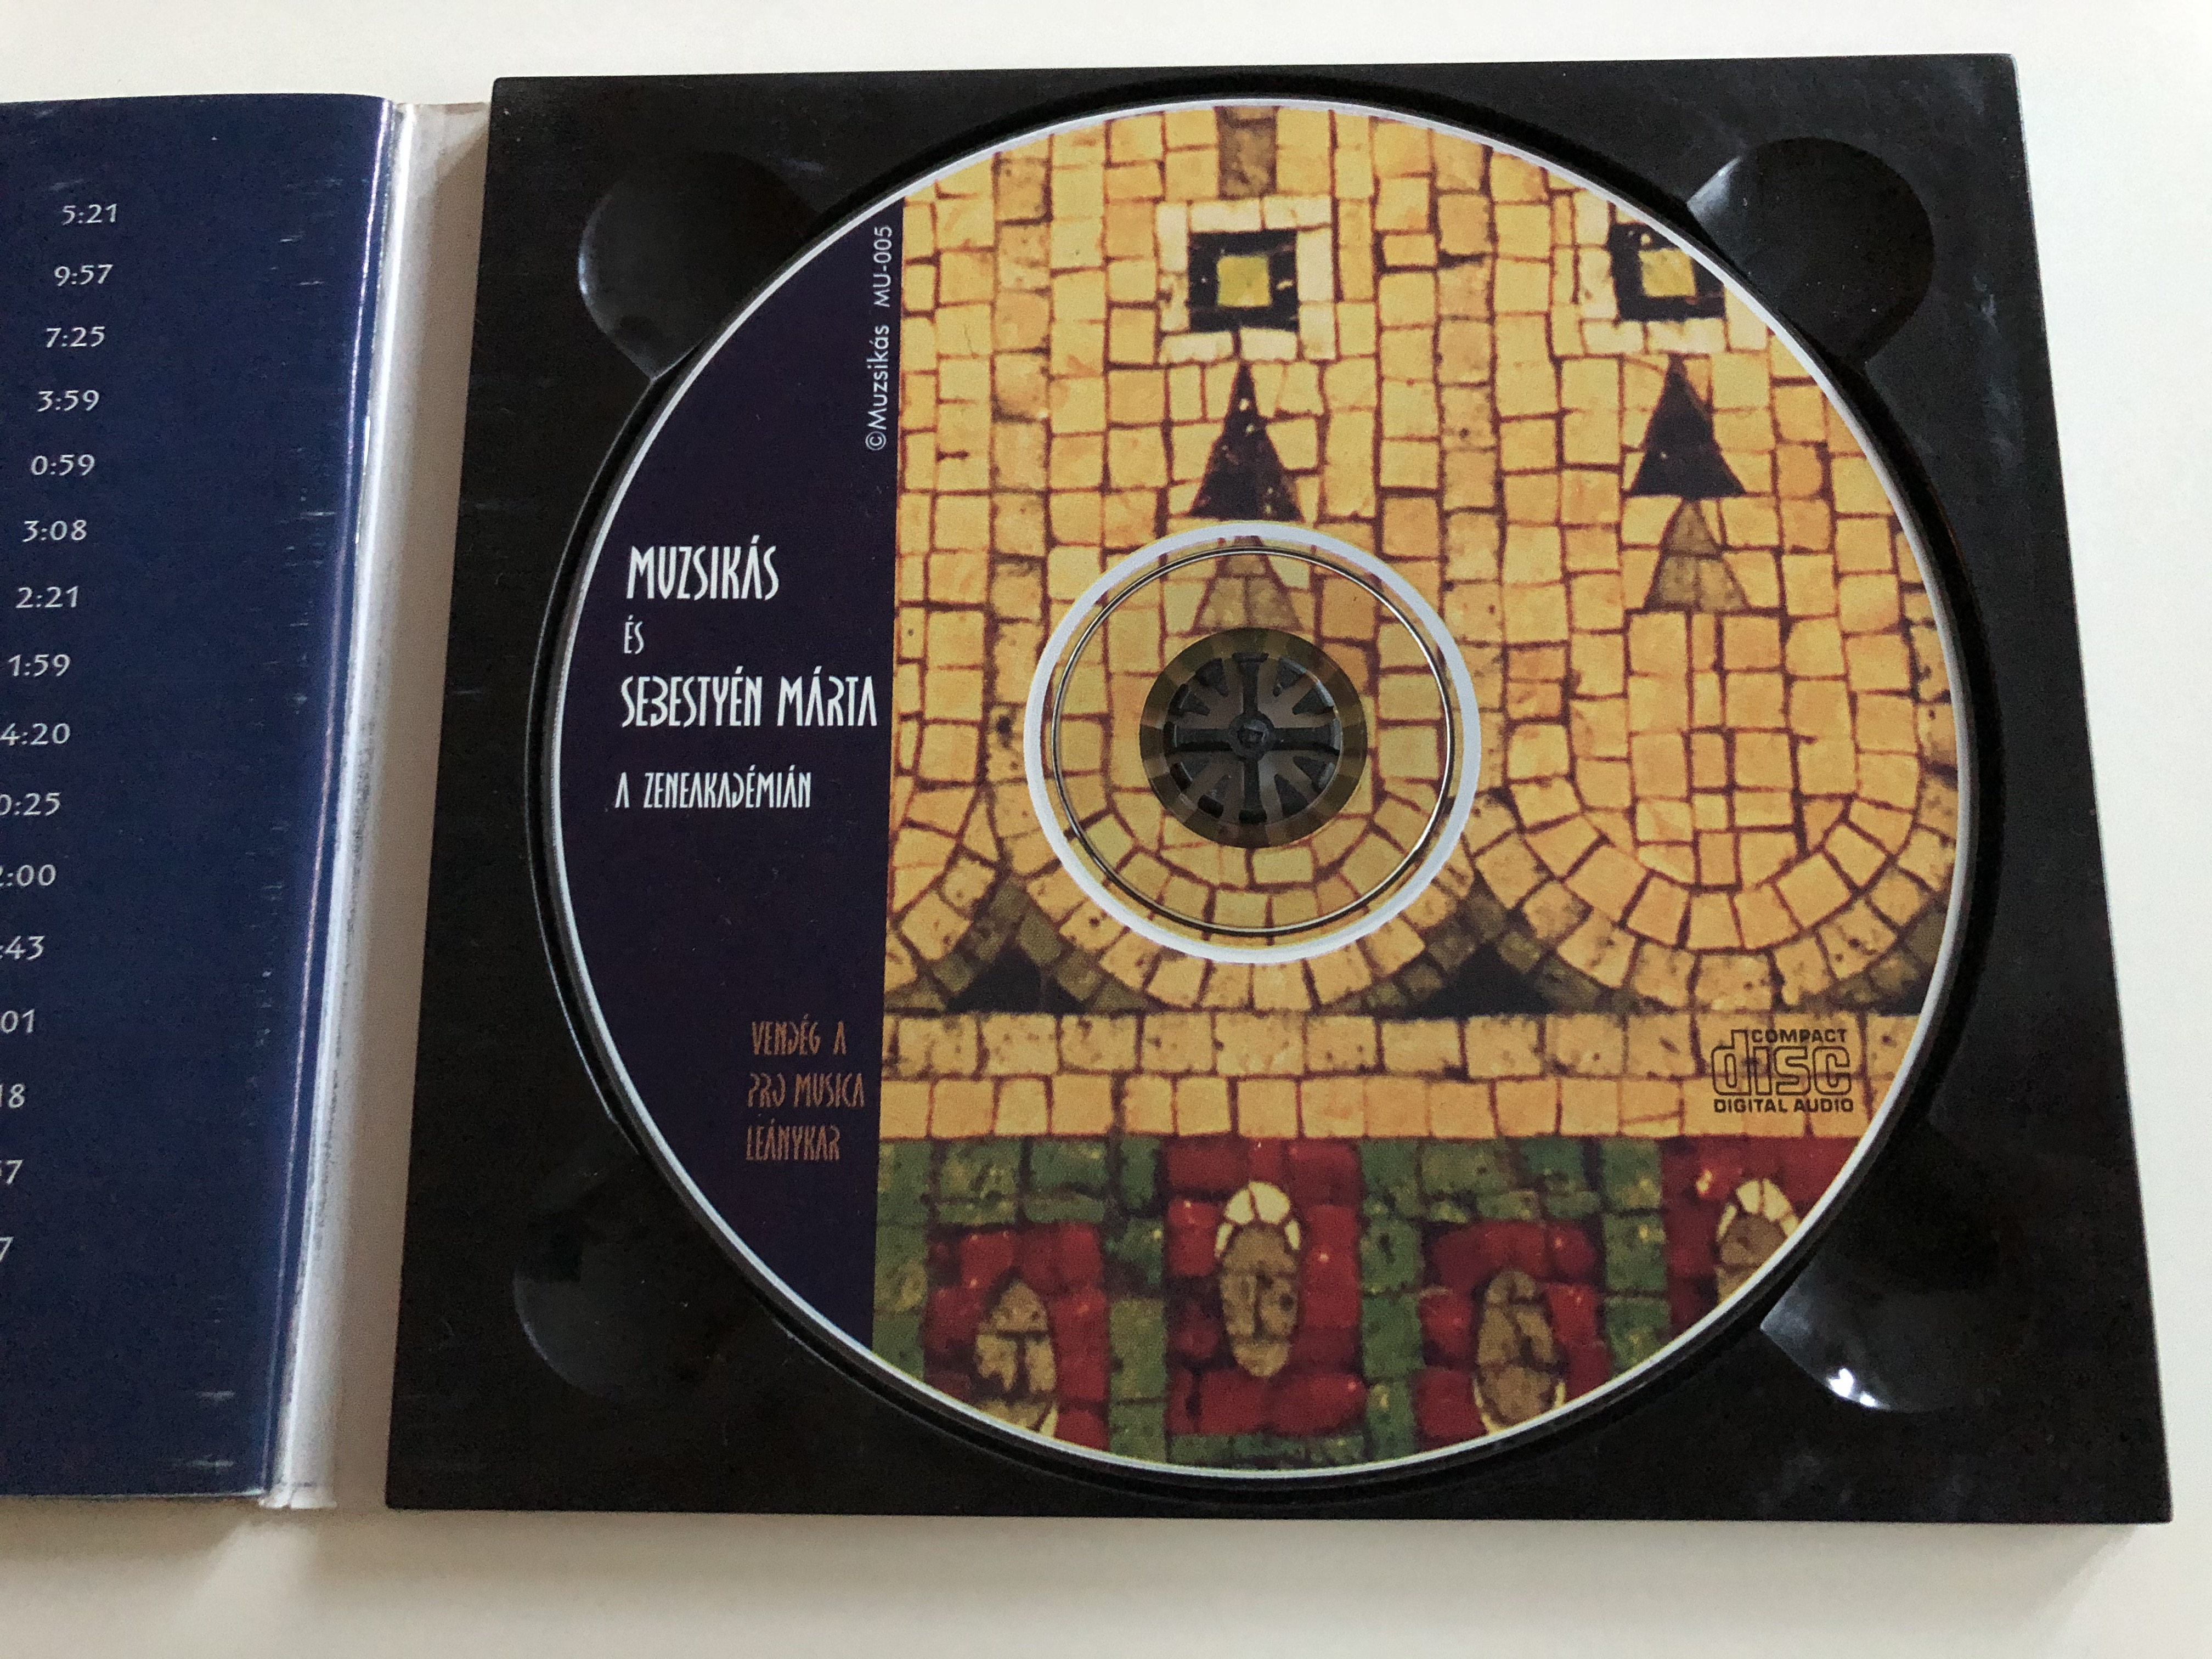 muzsik-s-s-sebesty-n-m-rta-a-zeneakad-mi-n-vendeg-a-pro-musica-leanykar-muzsik-s-audio-cd-2003-mu-005-2-.jpg